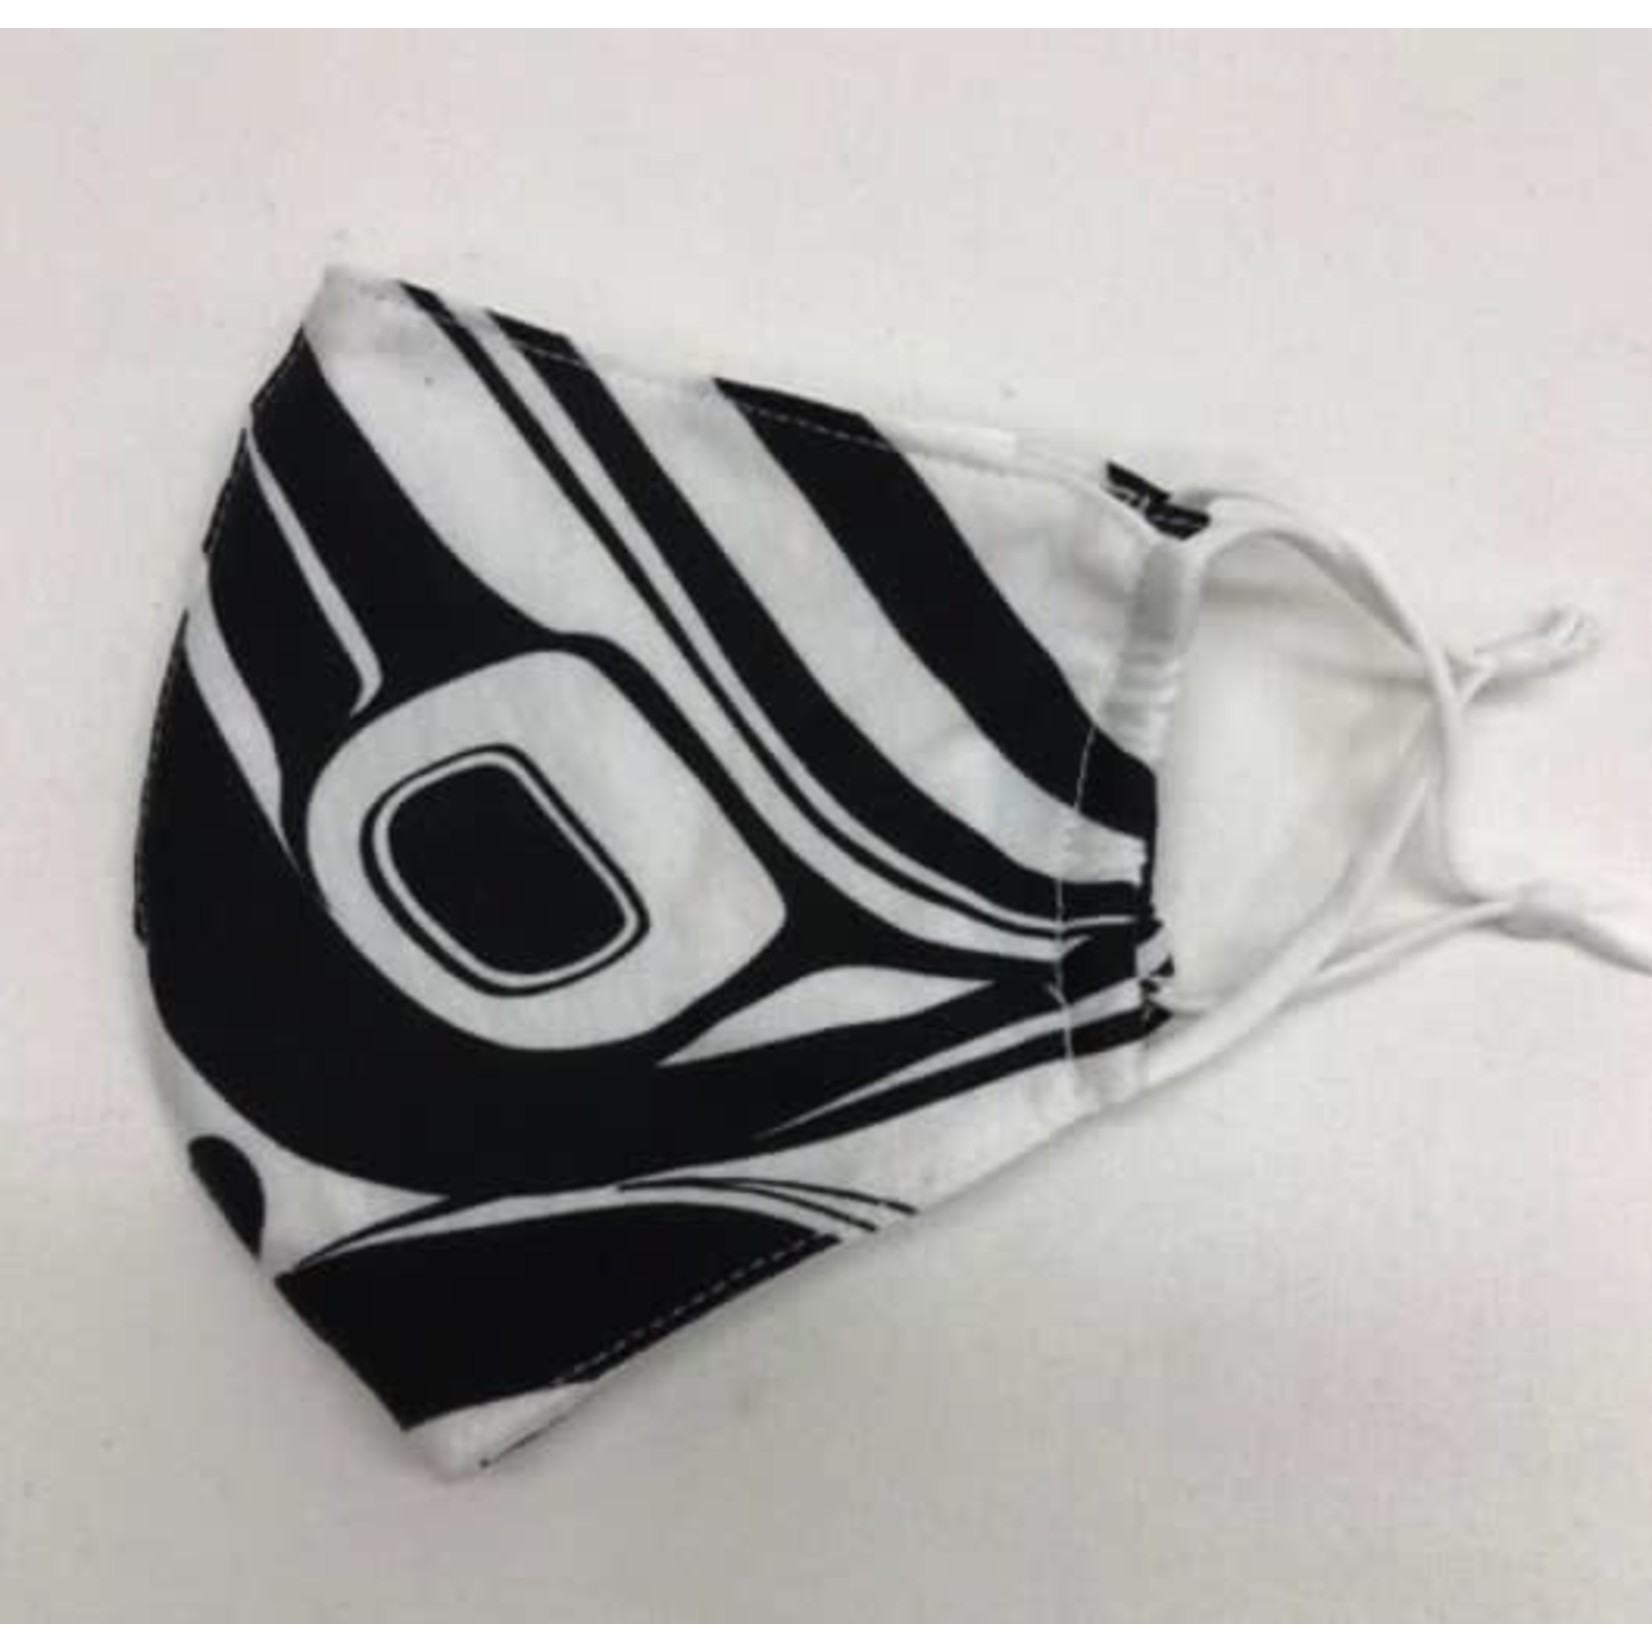 PANABO KELLY ROBINSON Raven Cotton Face Mask - Black / White REG $18.99 DNR